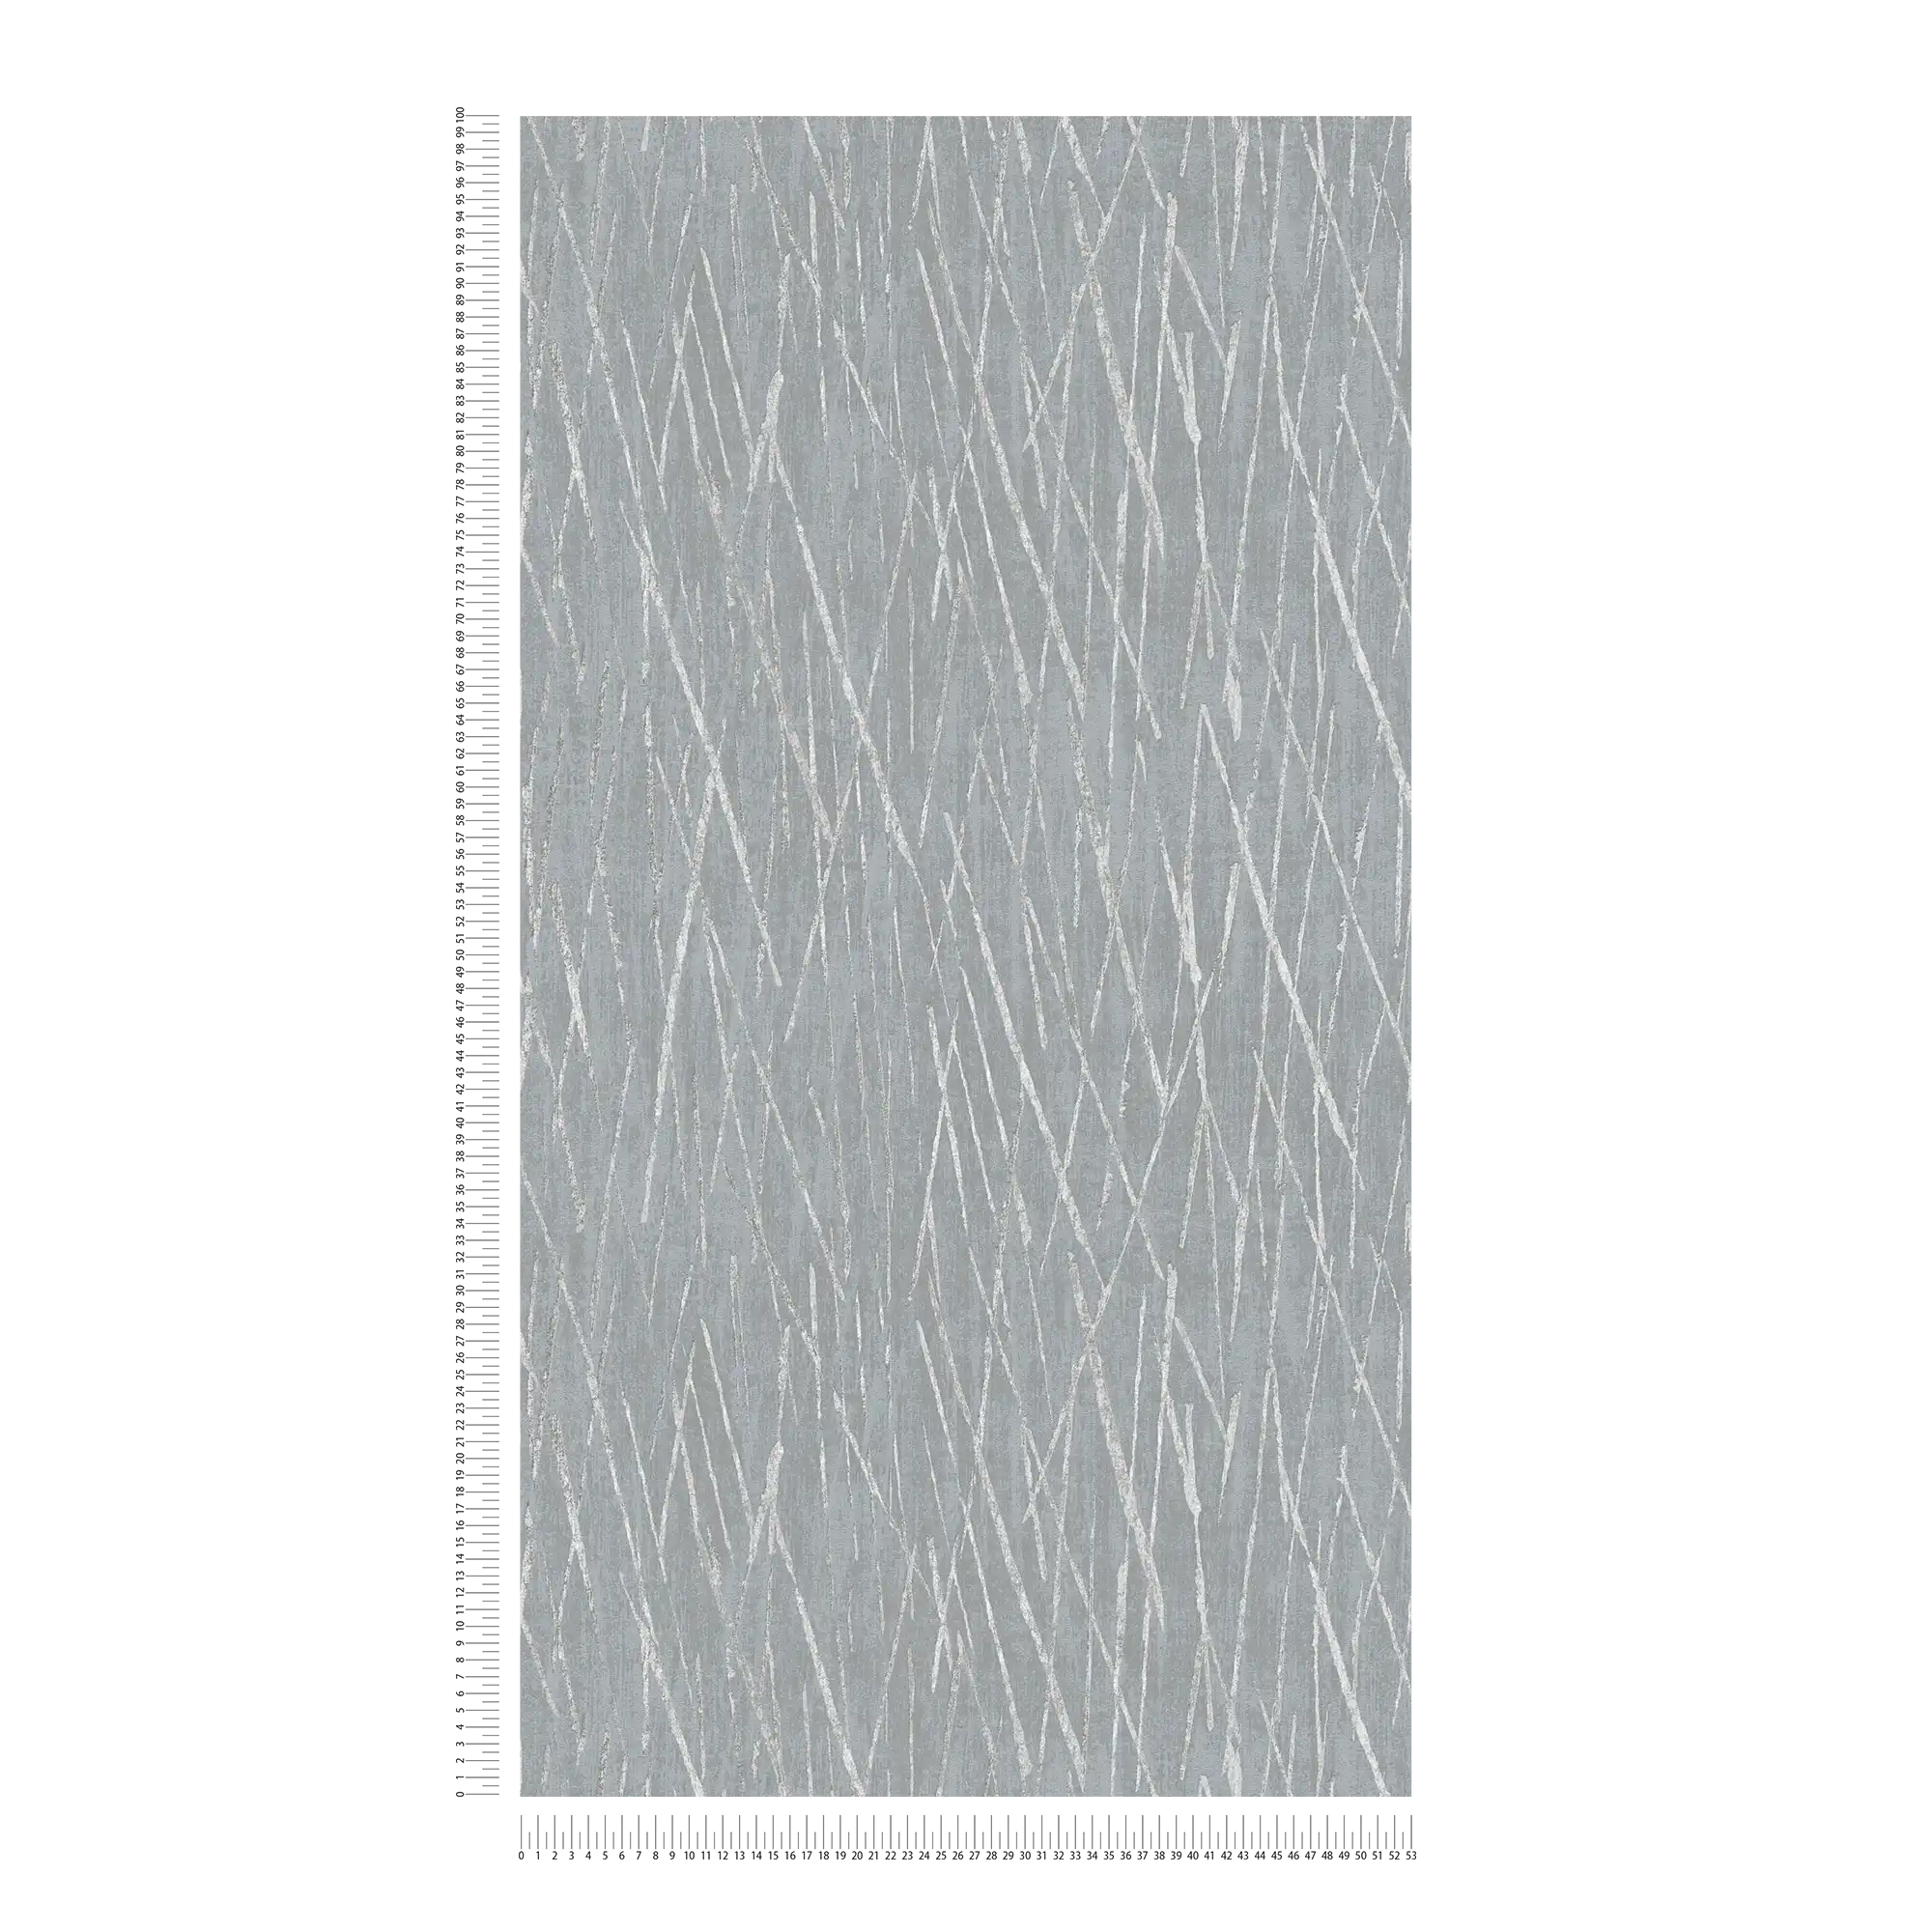             Non-woven wallpaper with nature design and metallic effect - grey, metallic
        